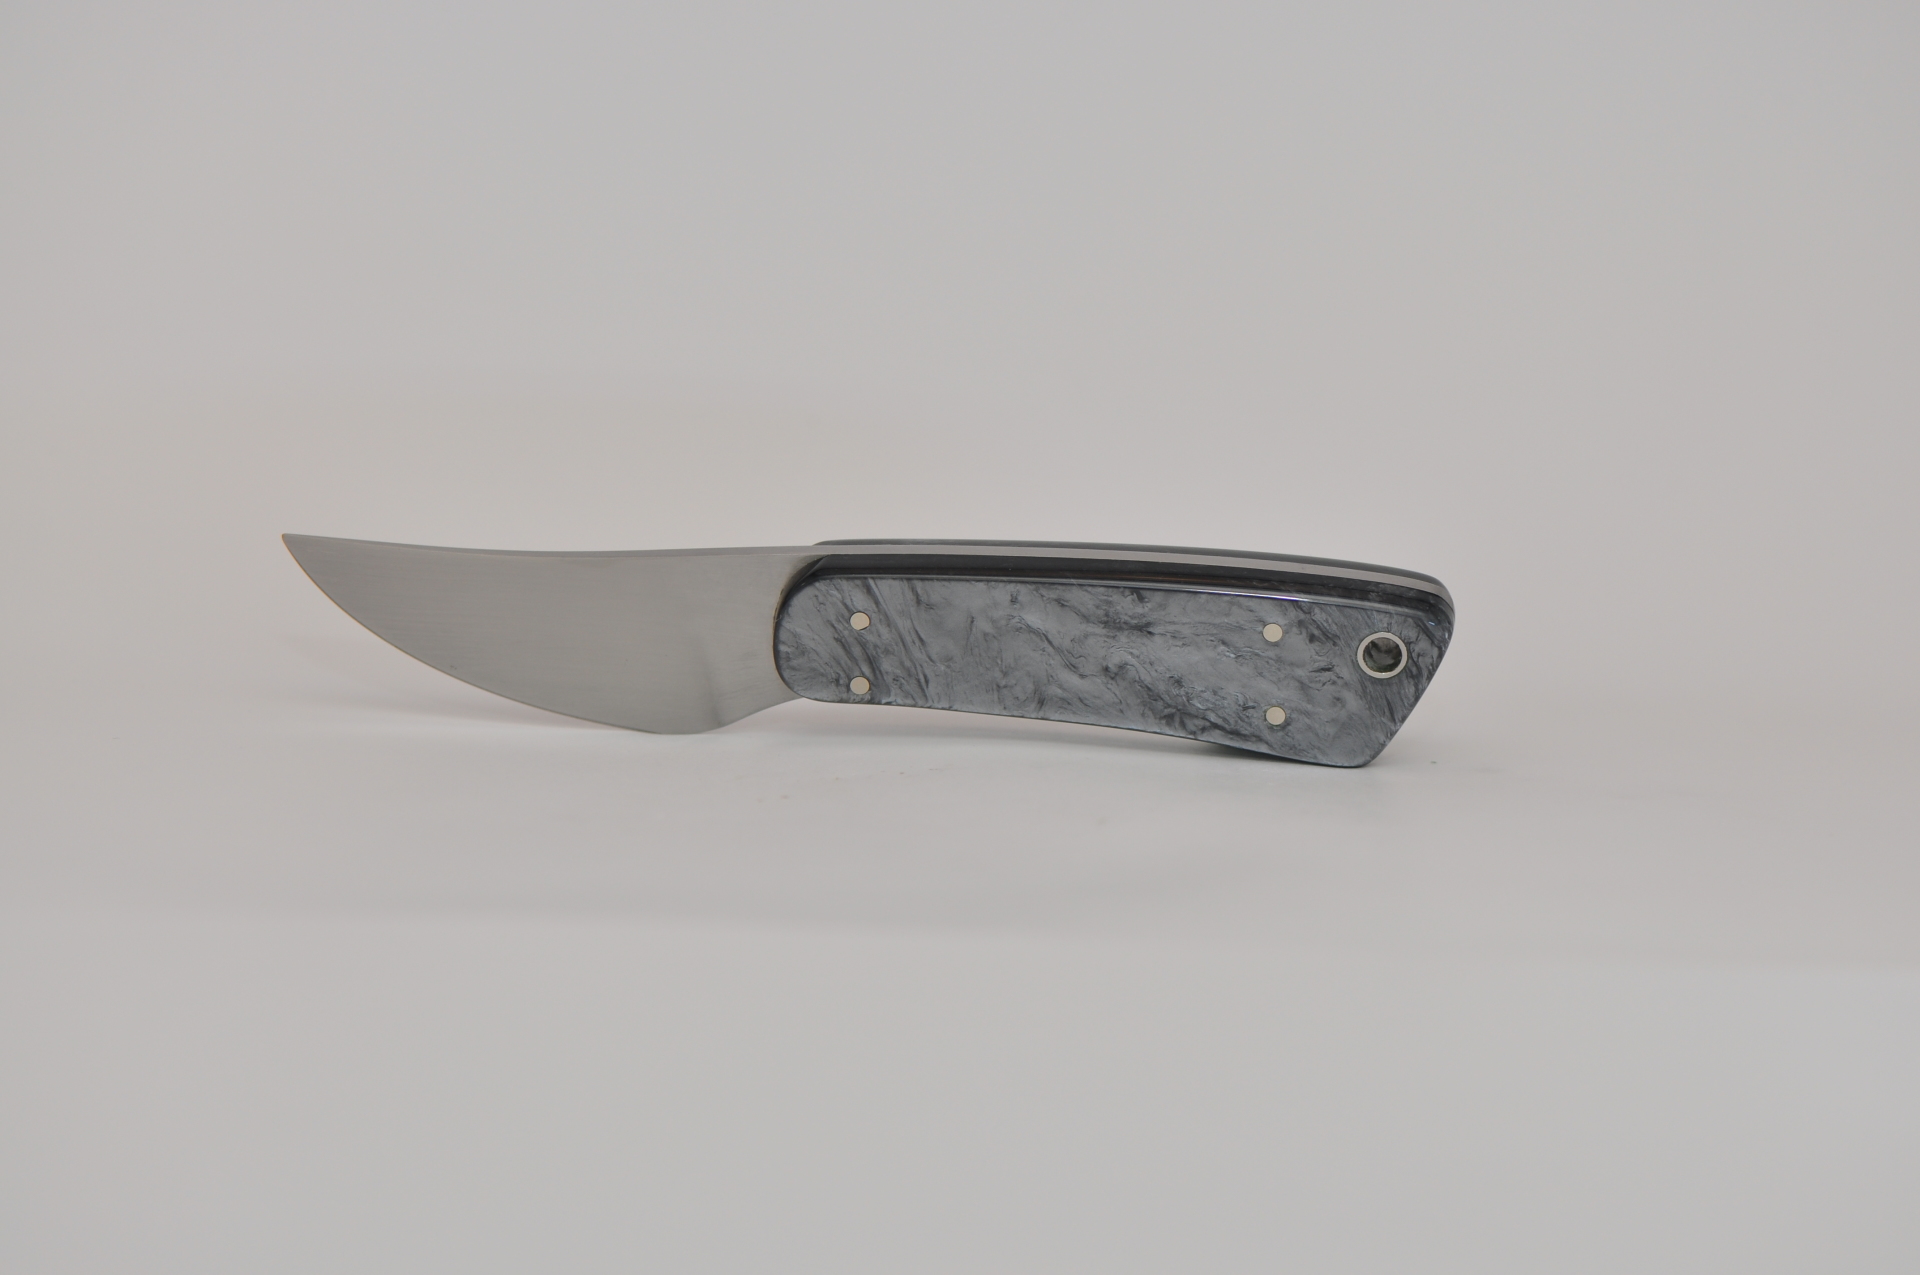 Schrade Company Knife custom made